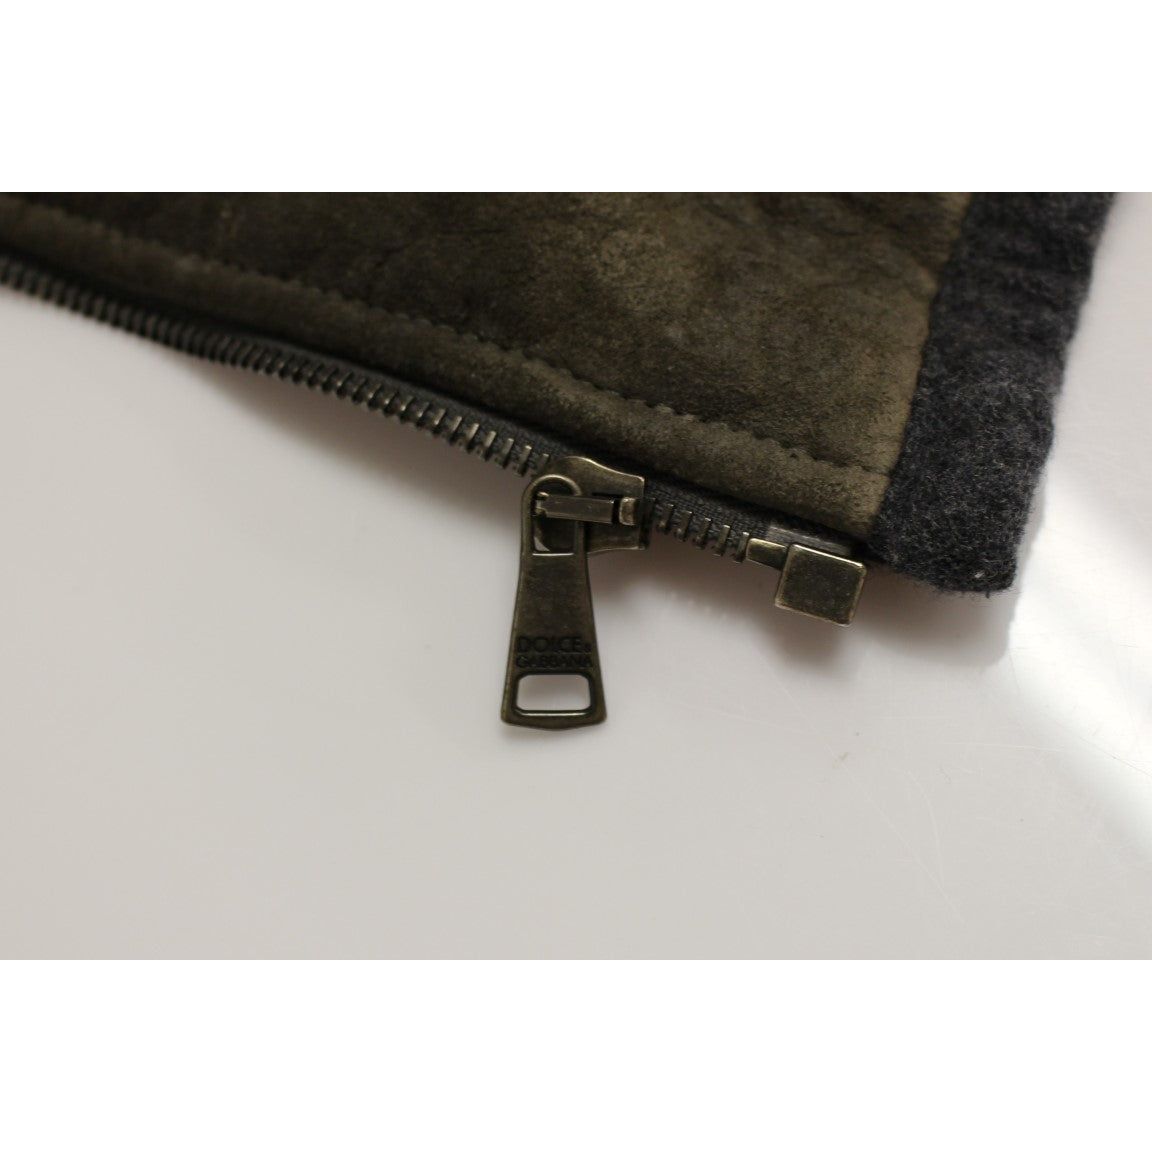 Dolce & Gabbana Elegant Leather & Wool Blend Jacket Coats & Jackets brown-gray-leather-jacket-coat 54860-brown-gray-leather-jacket-coat-7.jpg